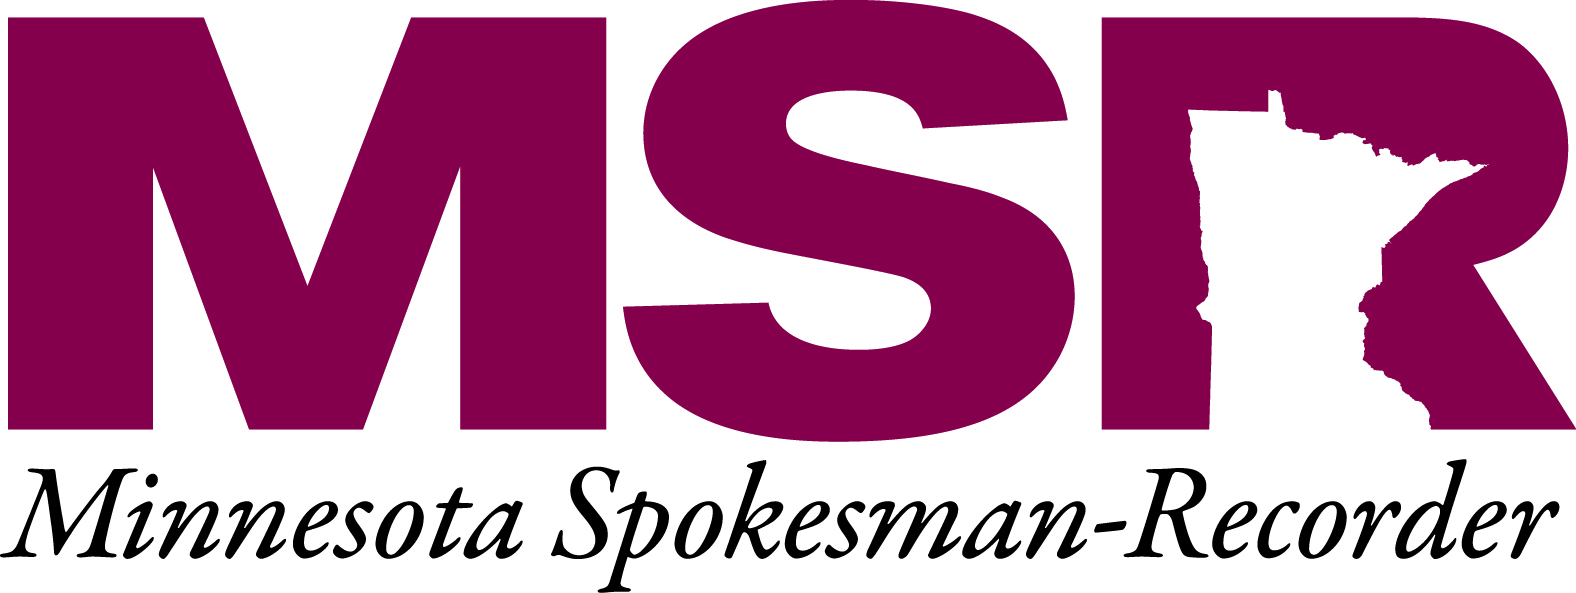 Minnesota Spokesman Recorder logo